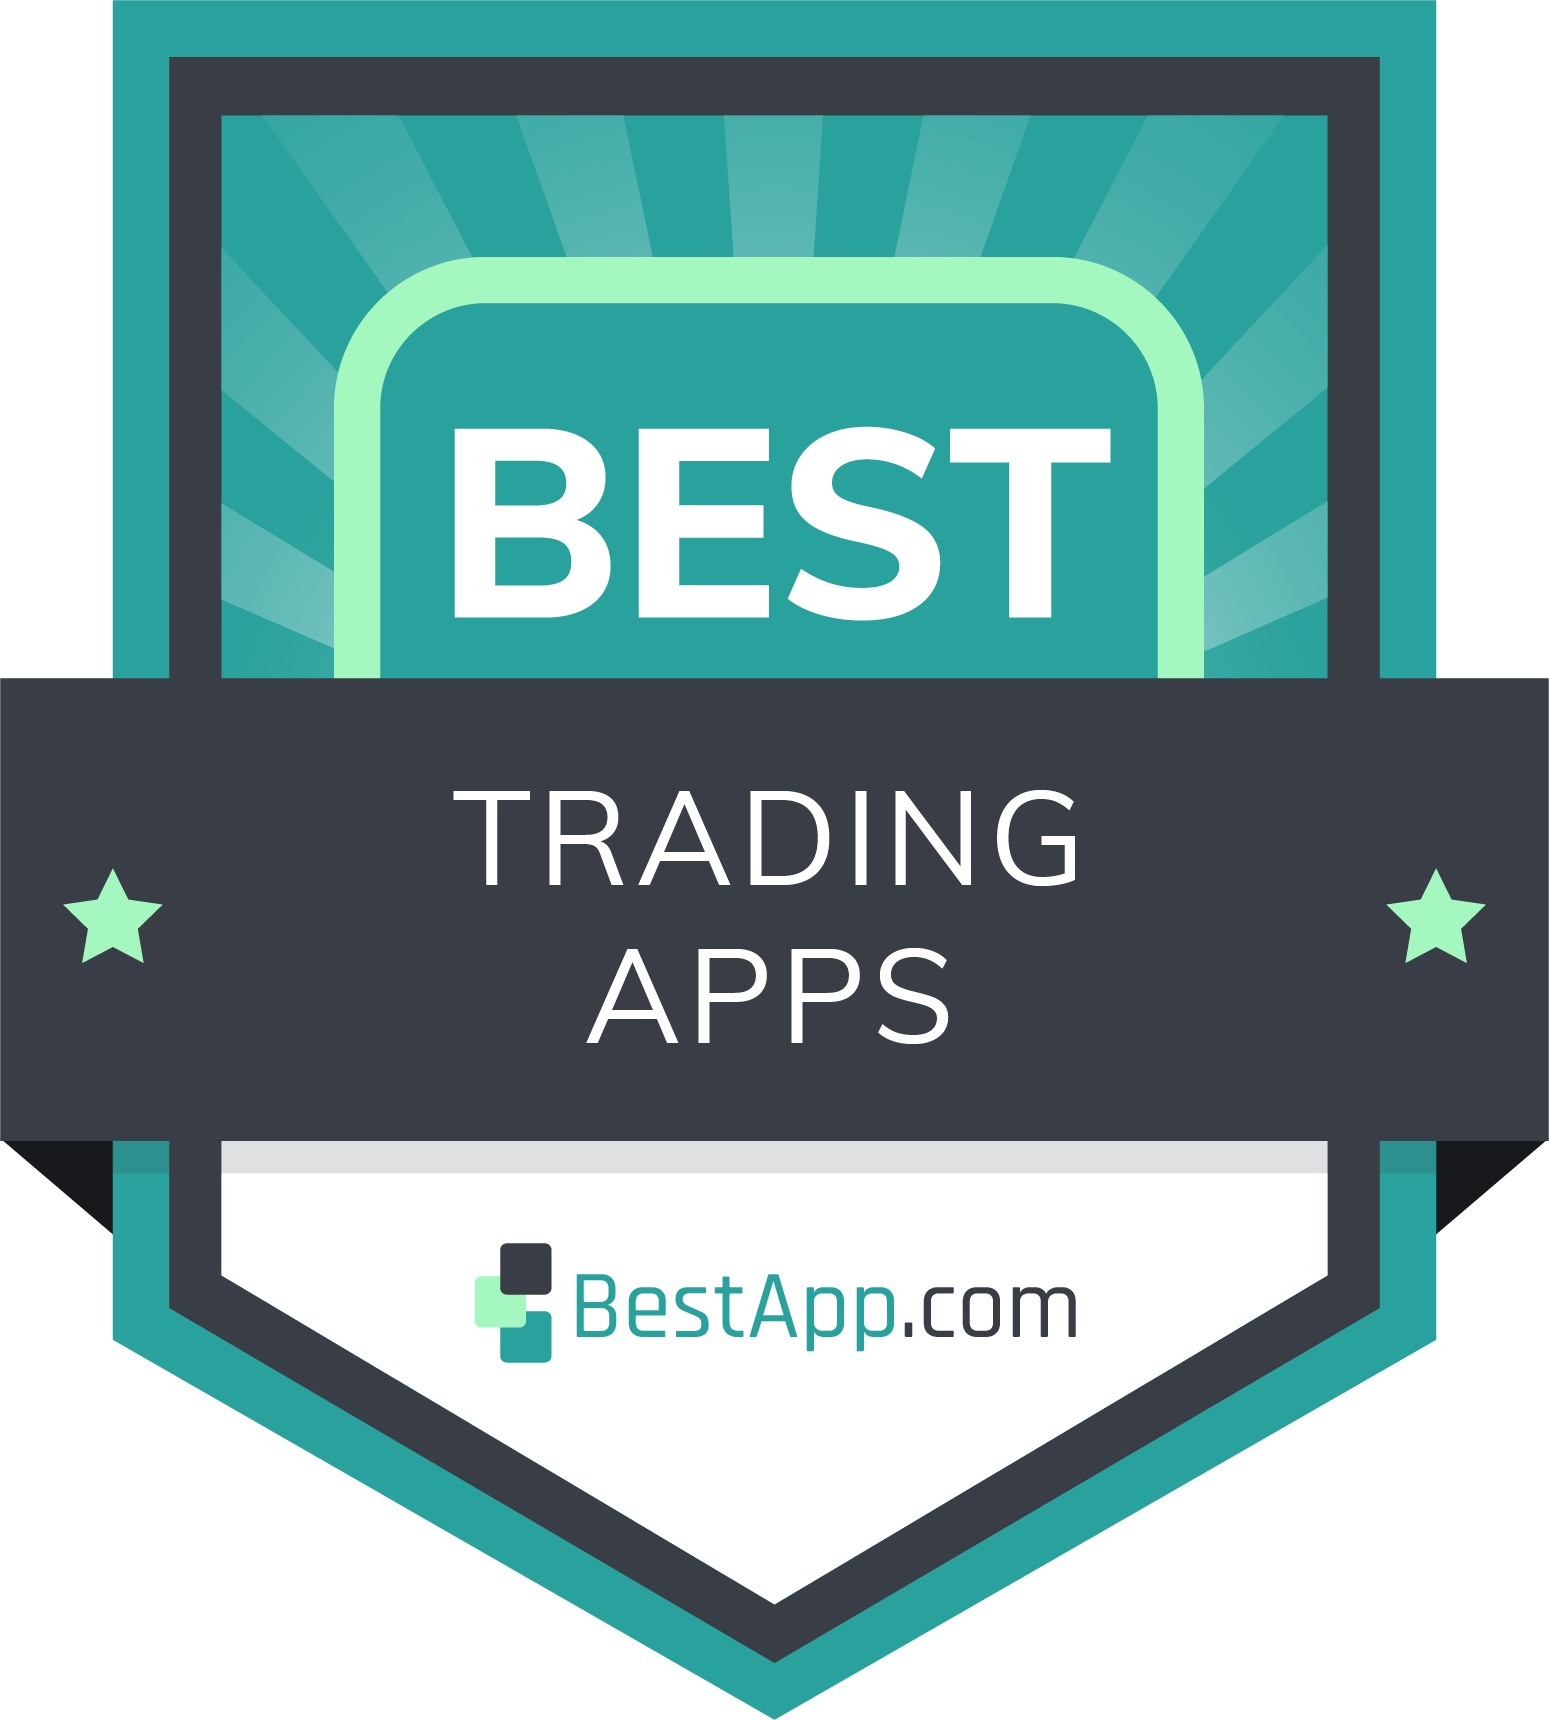 Best Trading Apps Badge